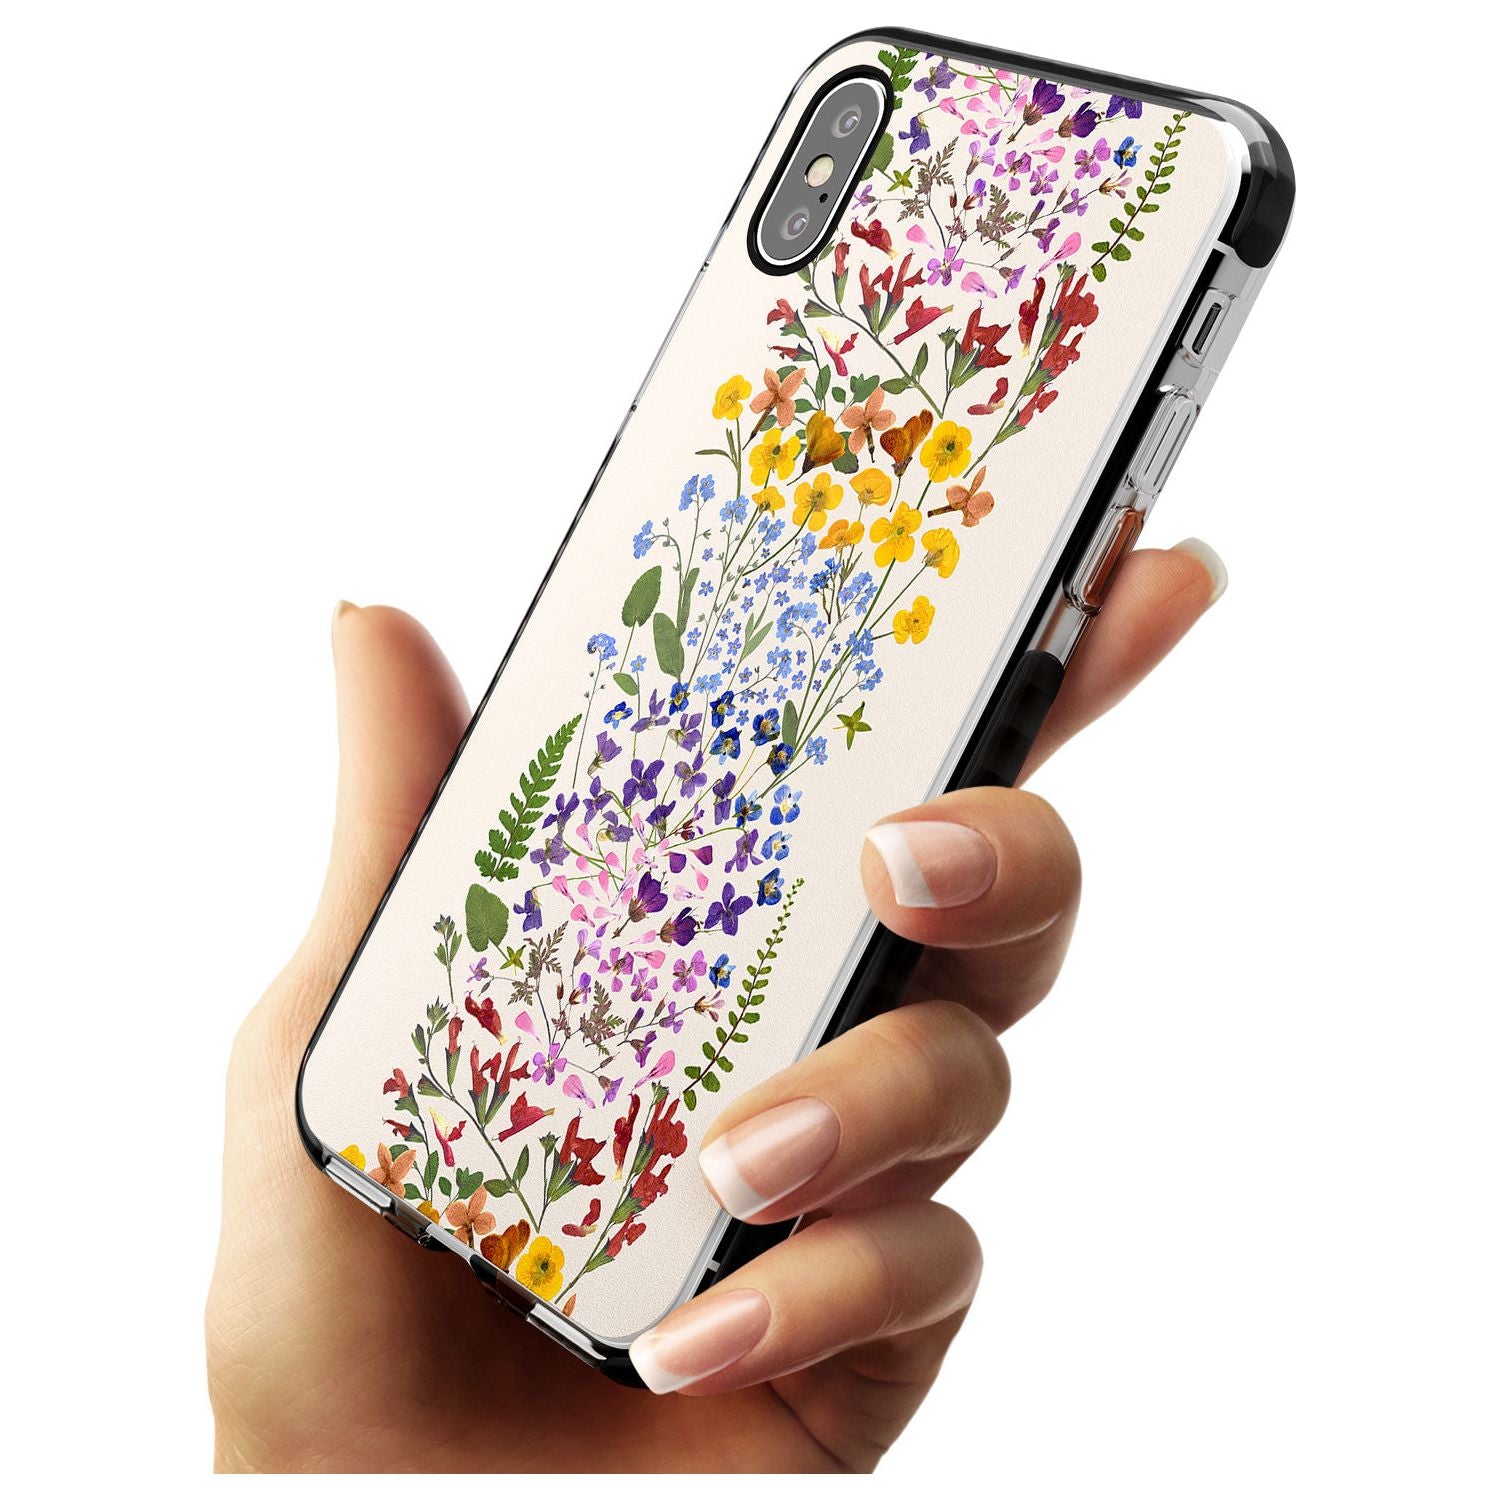 Wildflower Stripe Design - Cream Black Impact Phone Case for iPhone X XS Max XR